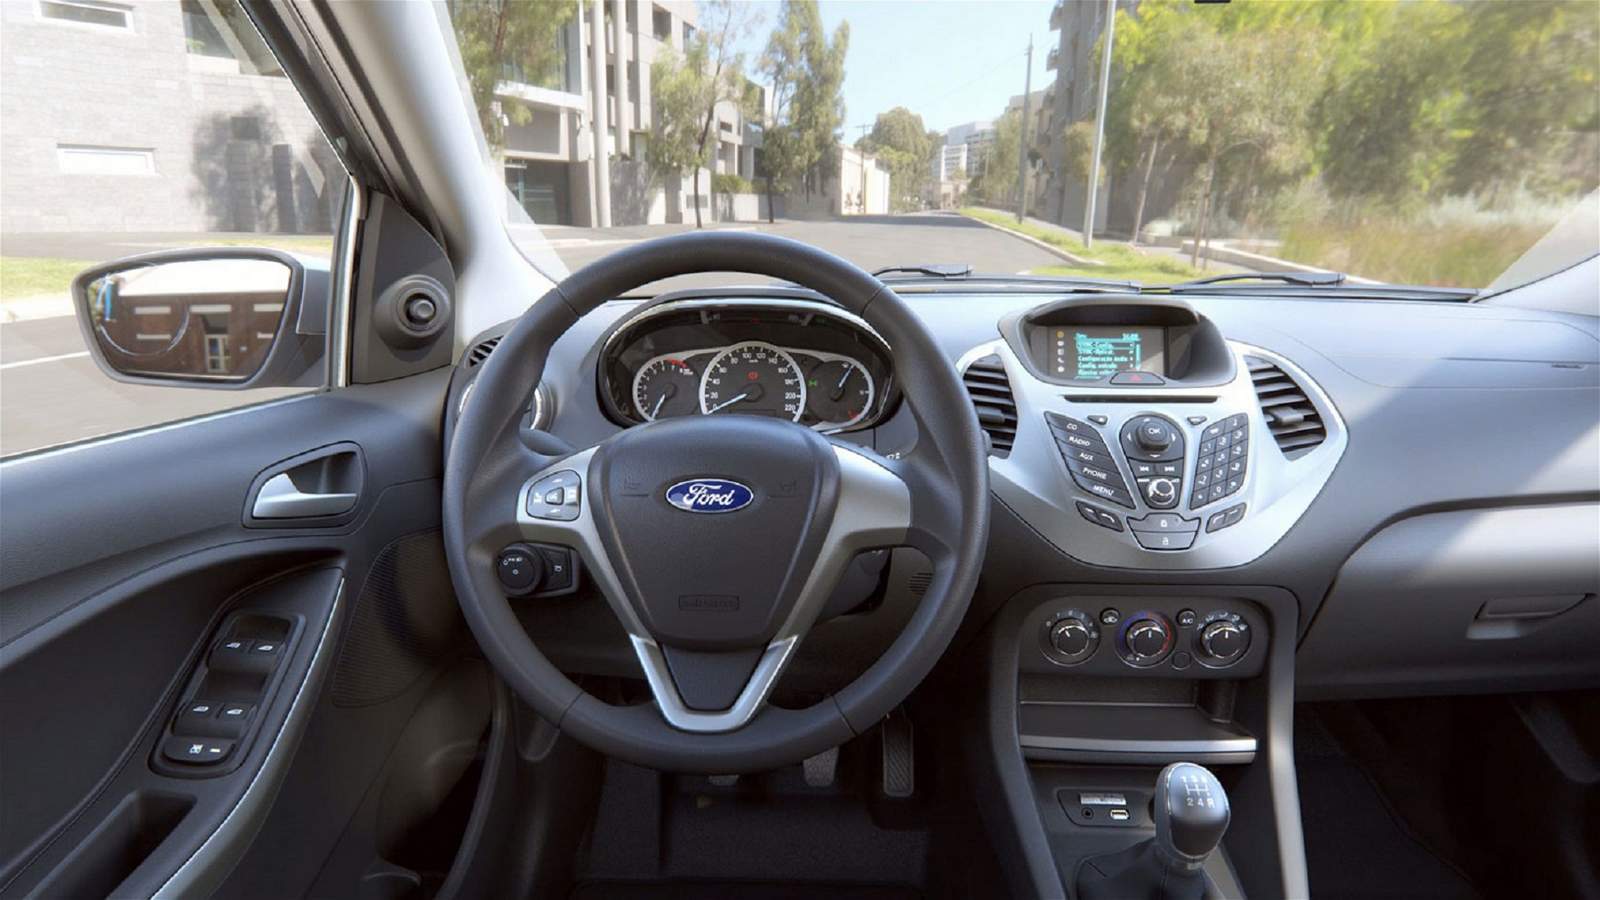 Novo Ford Ka 2015 - interior - painel